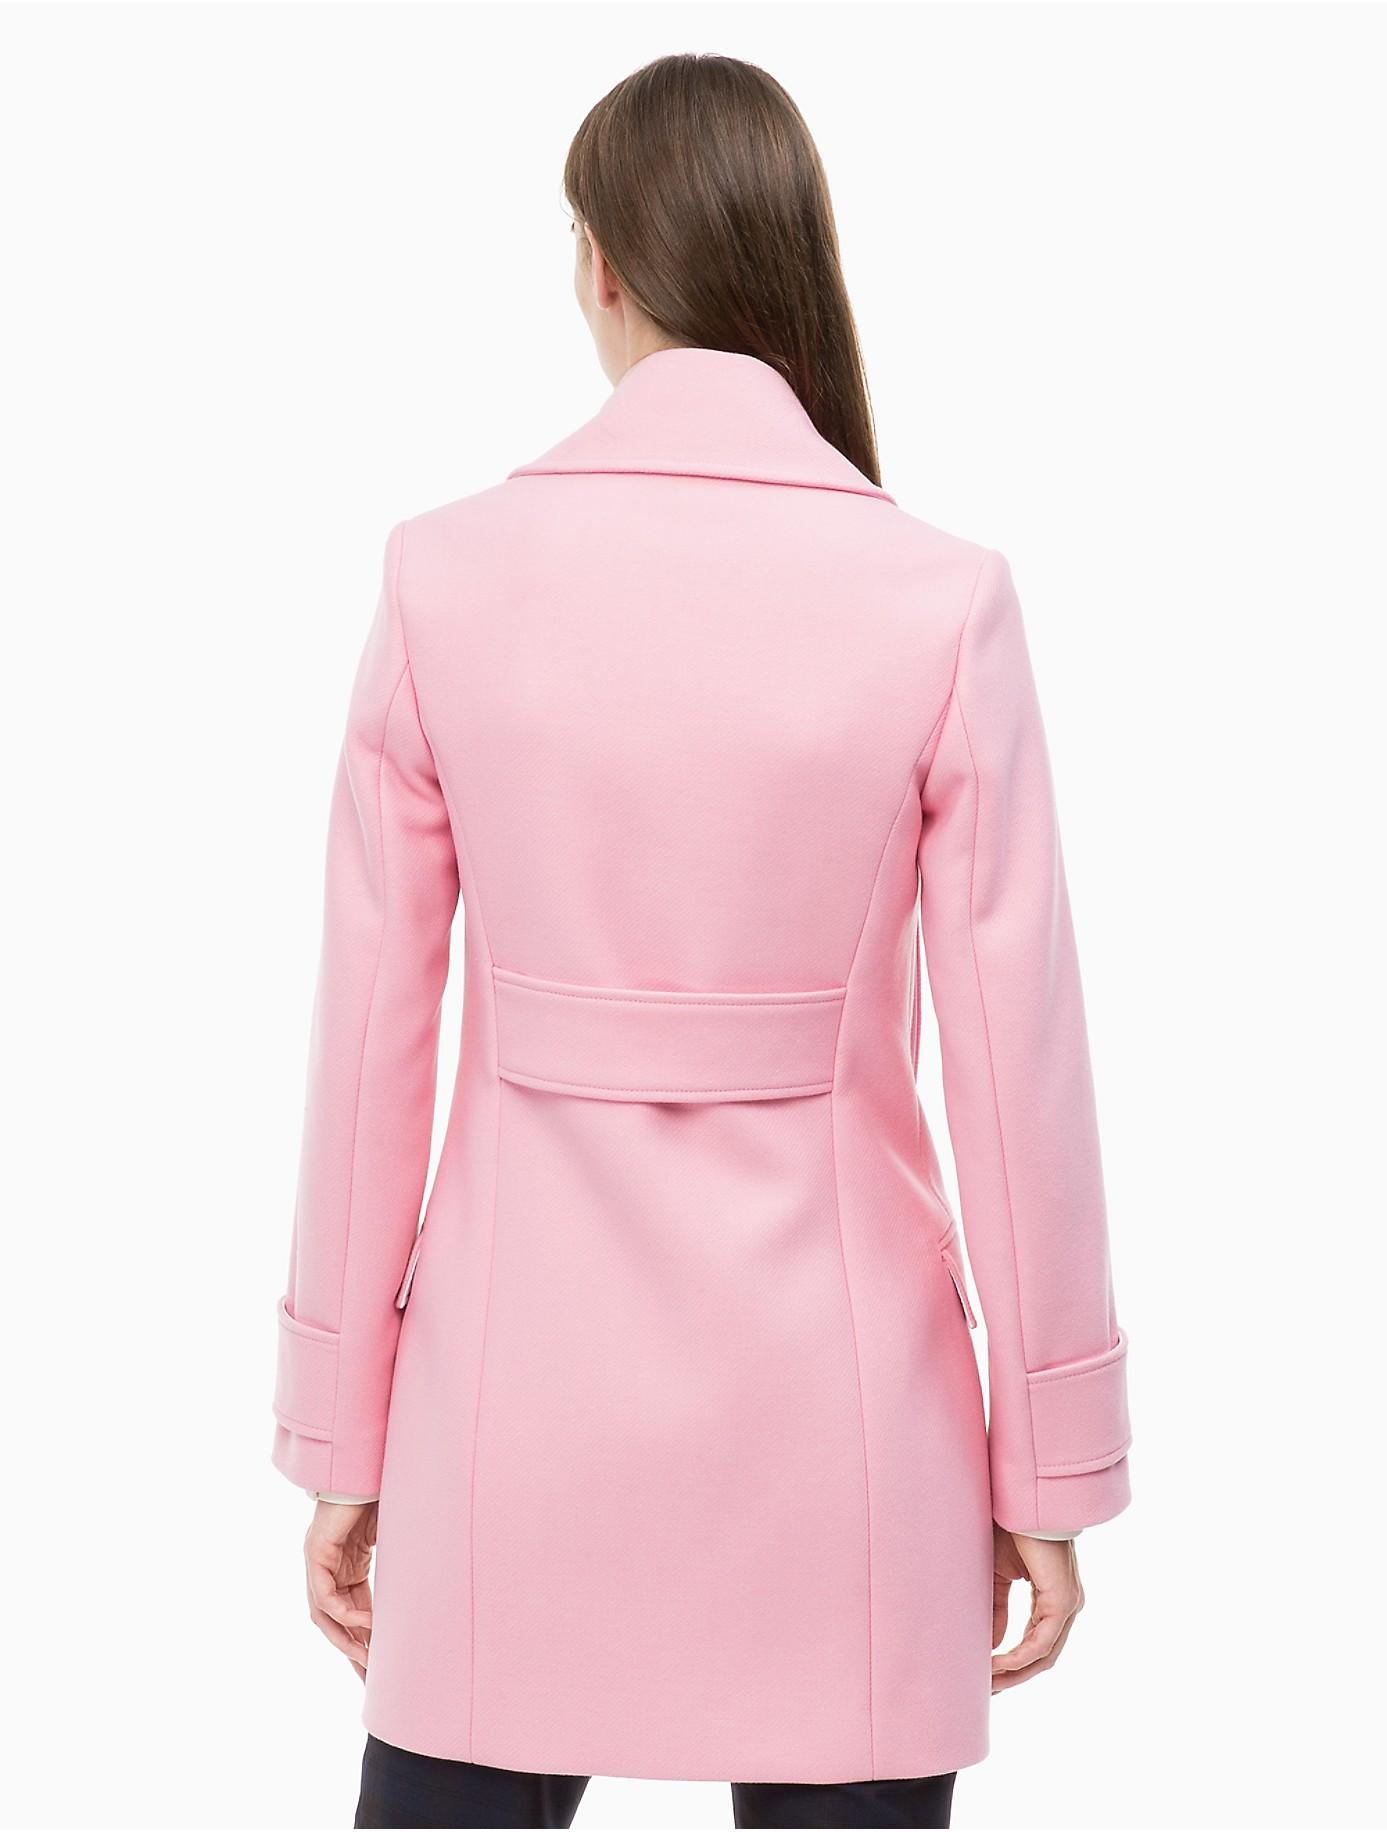 Calvin Klein Structured Wool Pea Coat in Blush (Pink) - Lyst